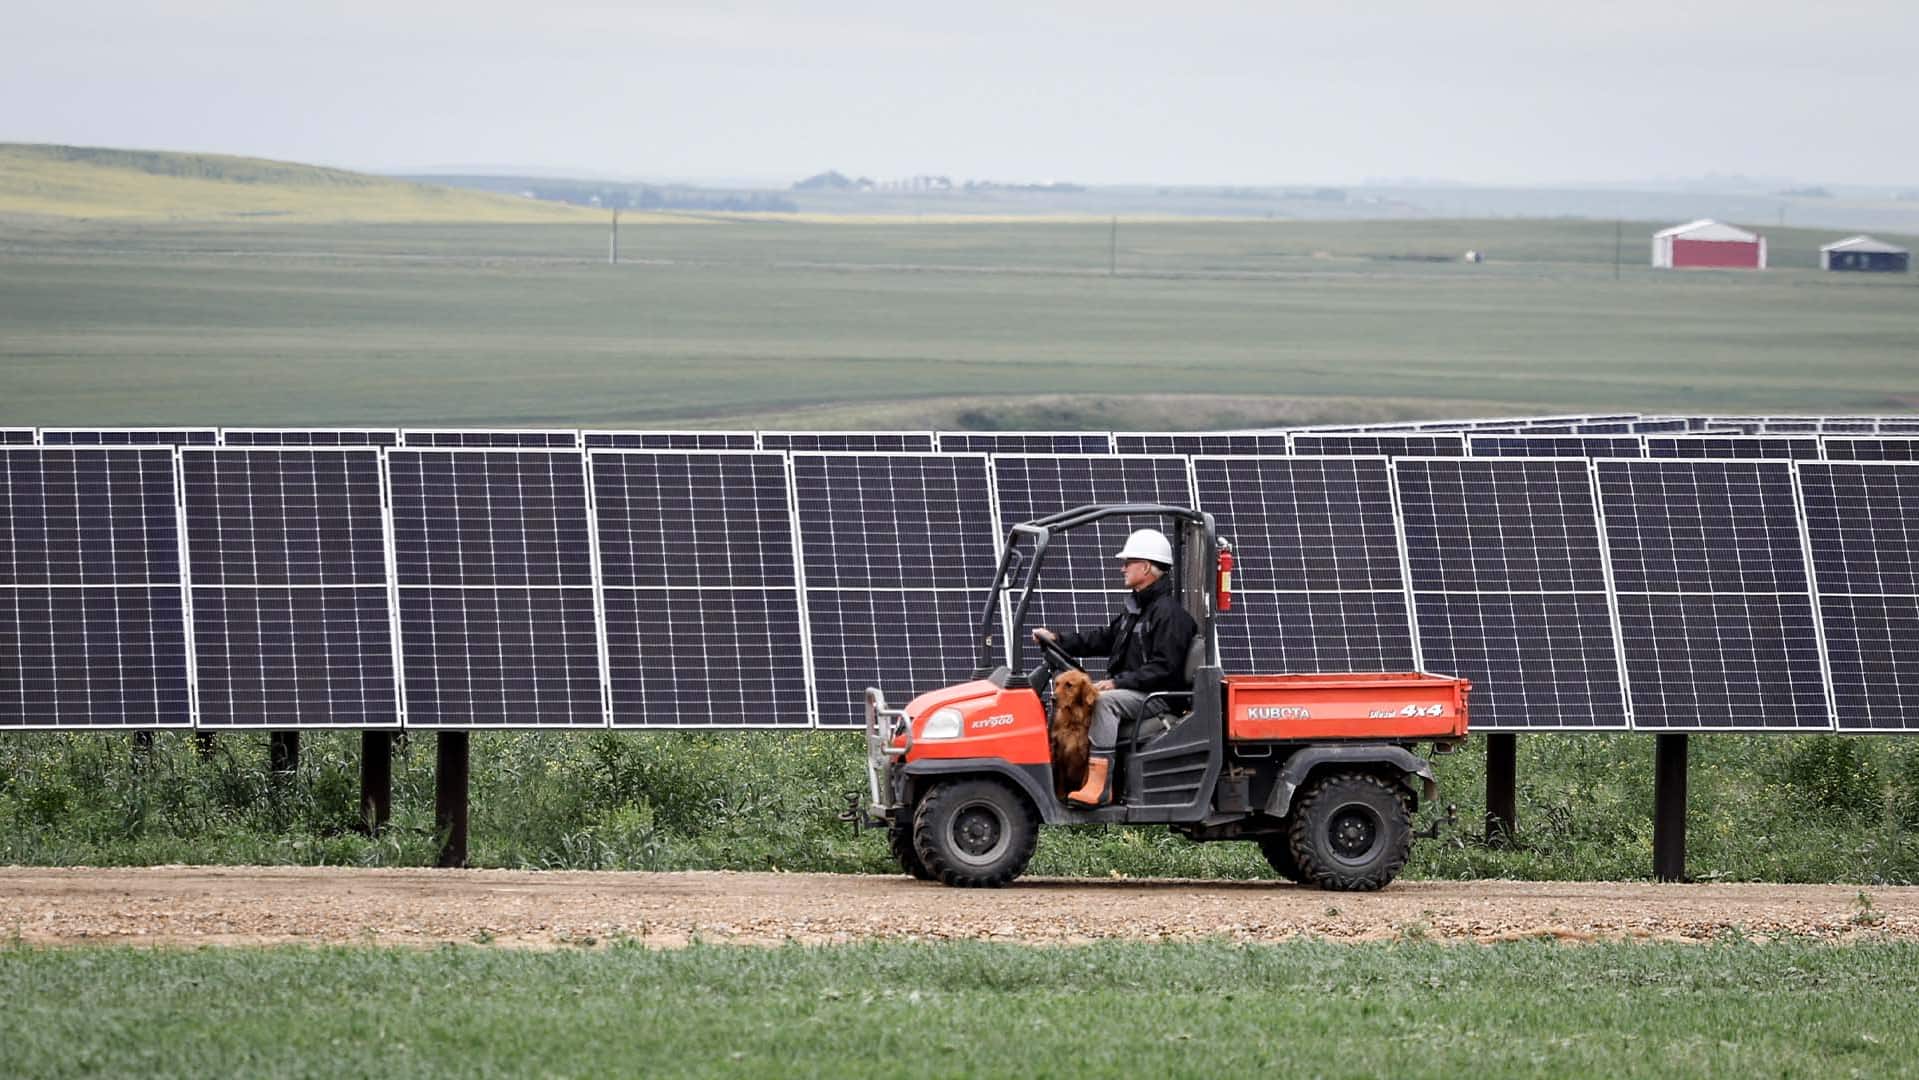 are solar farms really a threat to food farms